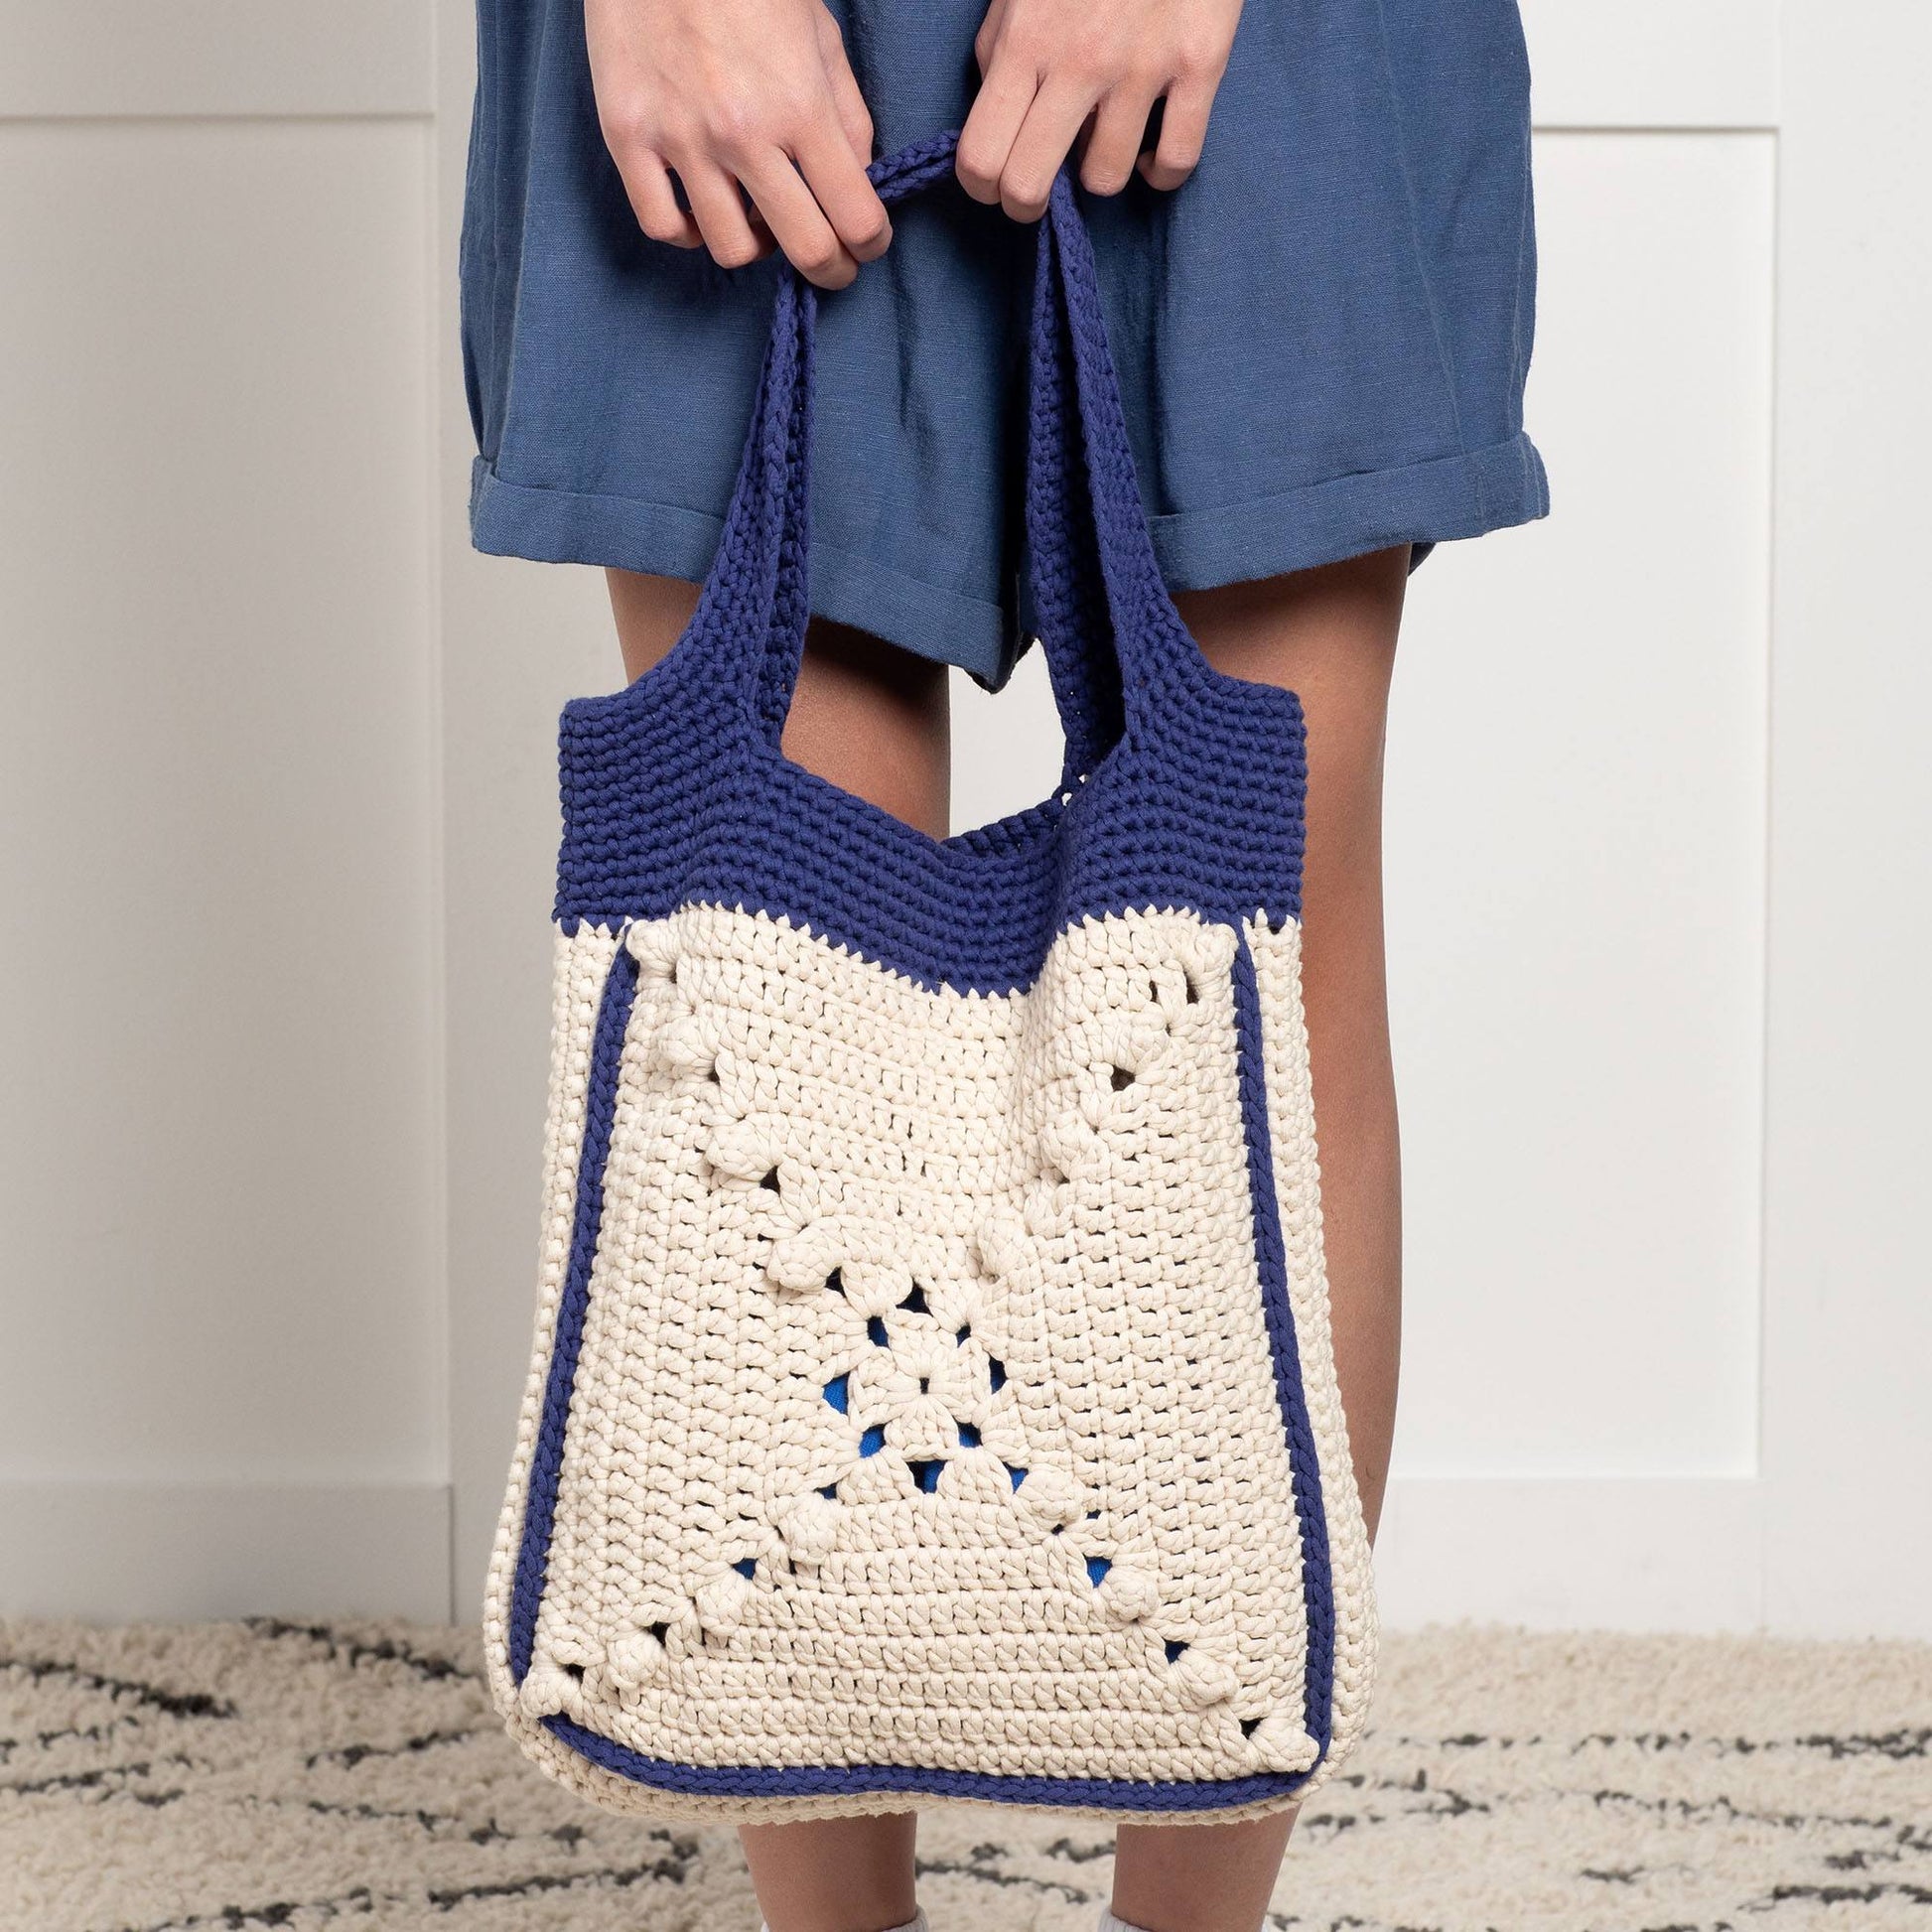 Free Bernat Crochet Carry On Tote Bag Pattern